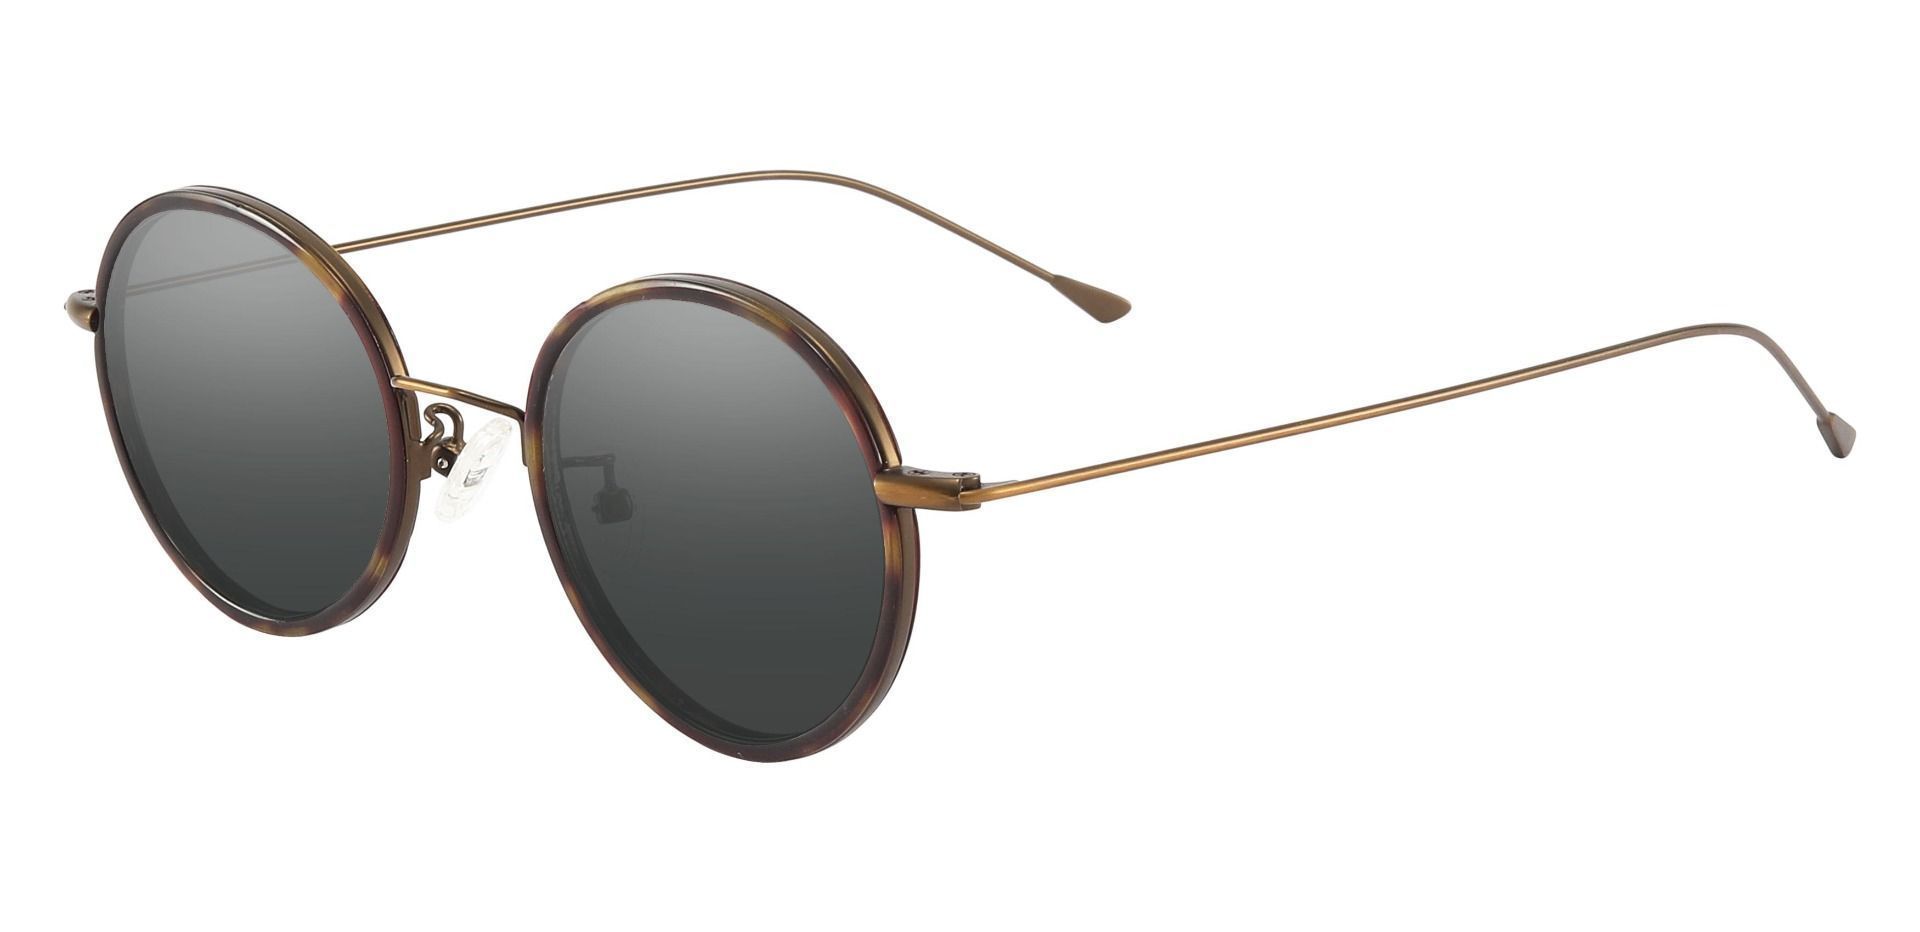 Malverne Oval Non-Rx Sunglasses - Tortoise Frame With Gray Lenses